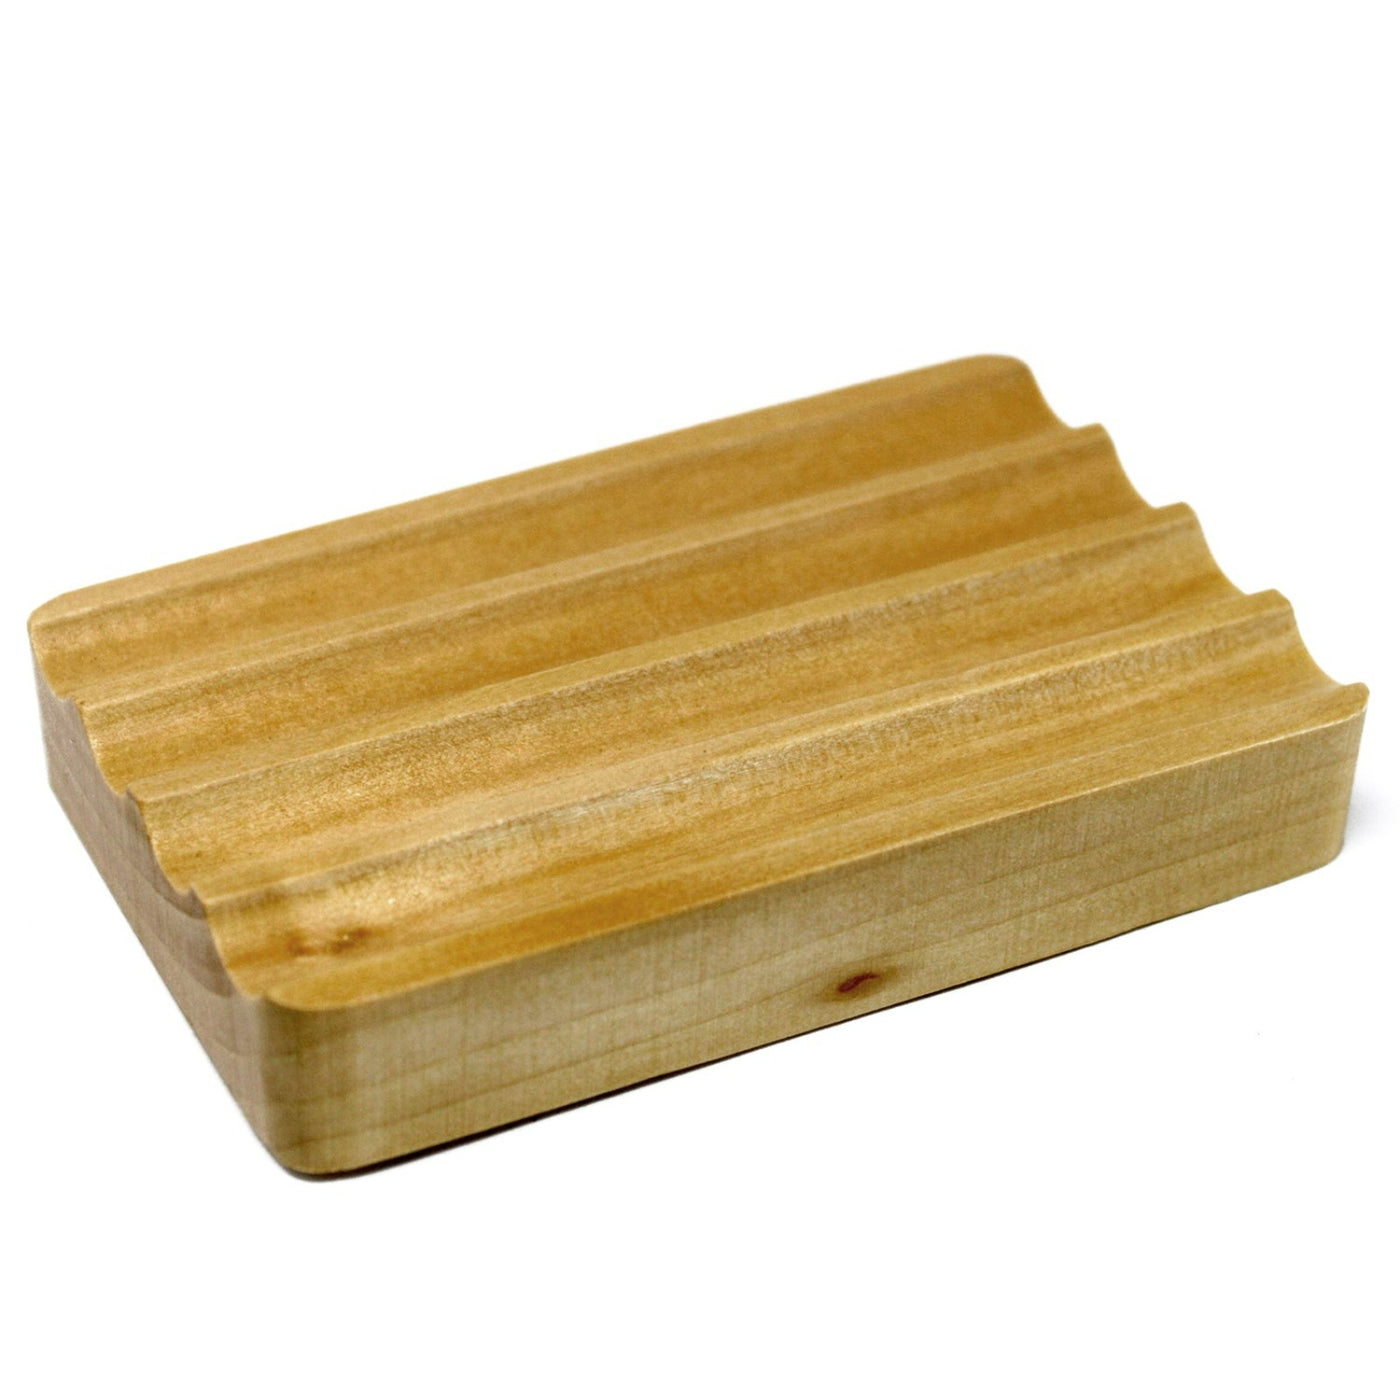 Natural Wood Corrugated Rectangle Soap Dish.